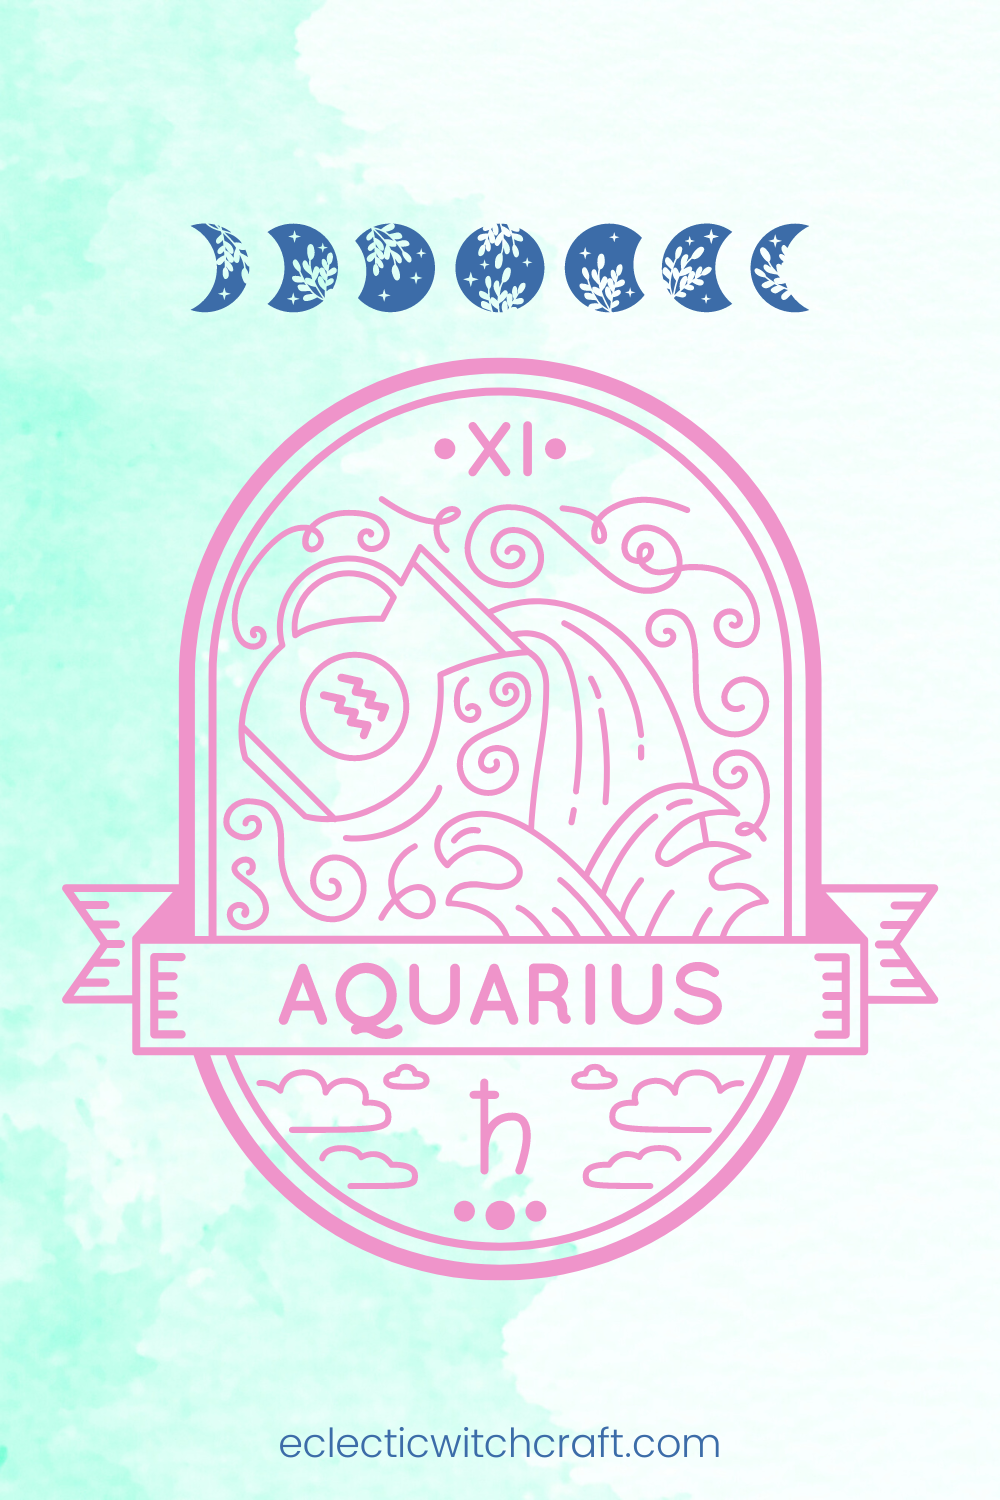 Aquarius moon water magical correspondences